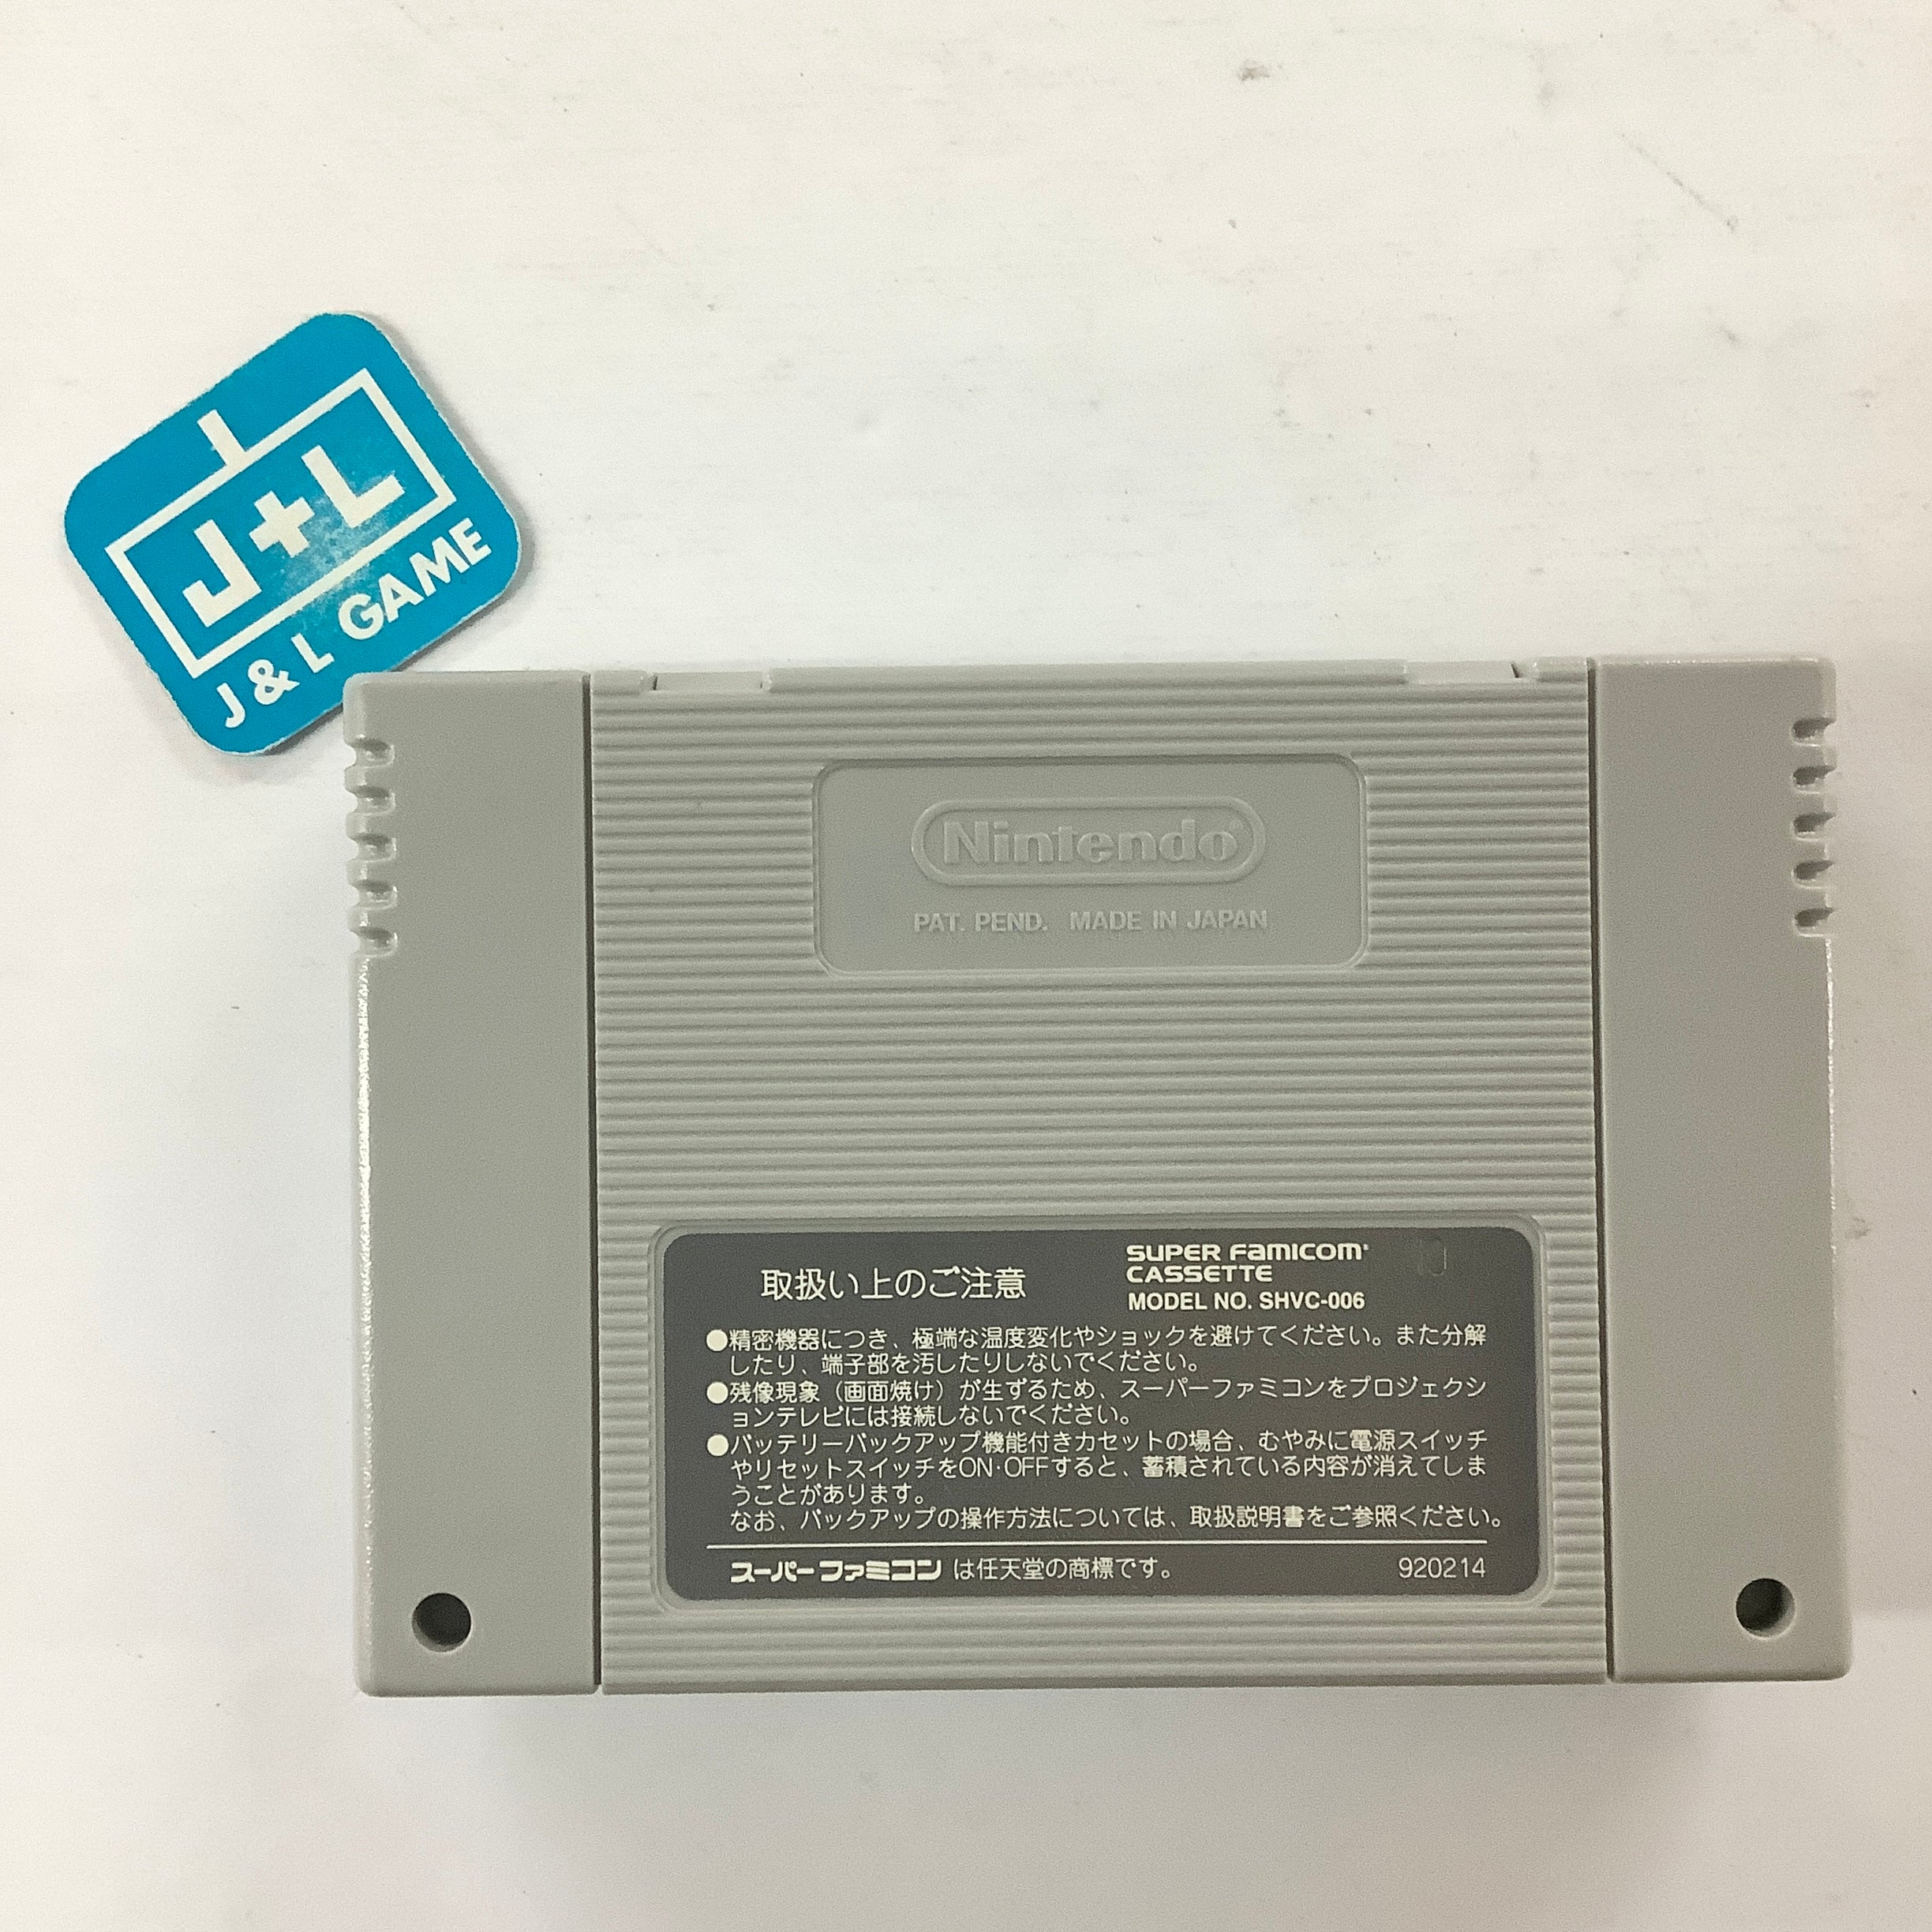 Super Jinsei Game 2 - (SFC) Super Famicom [Pre-Owned] (Japanese Import) Video Games Takara   